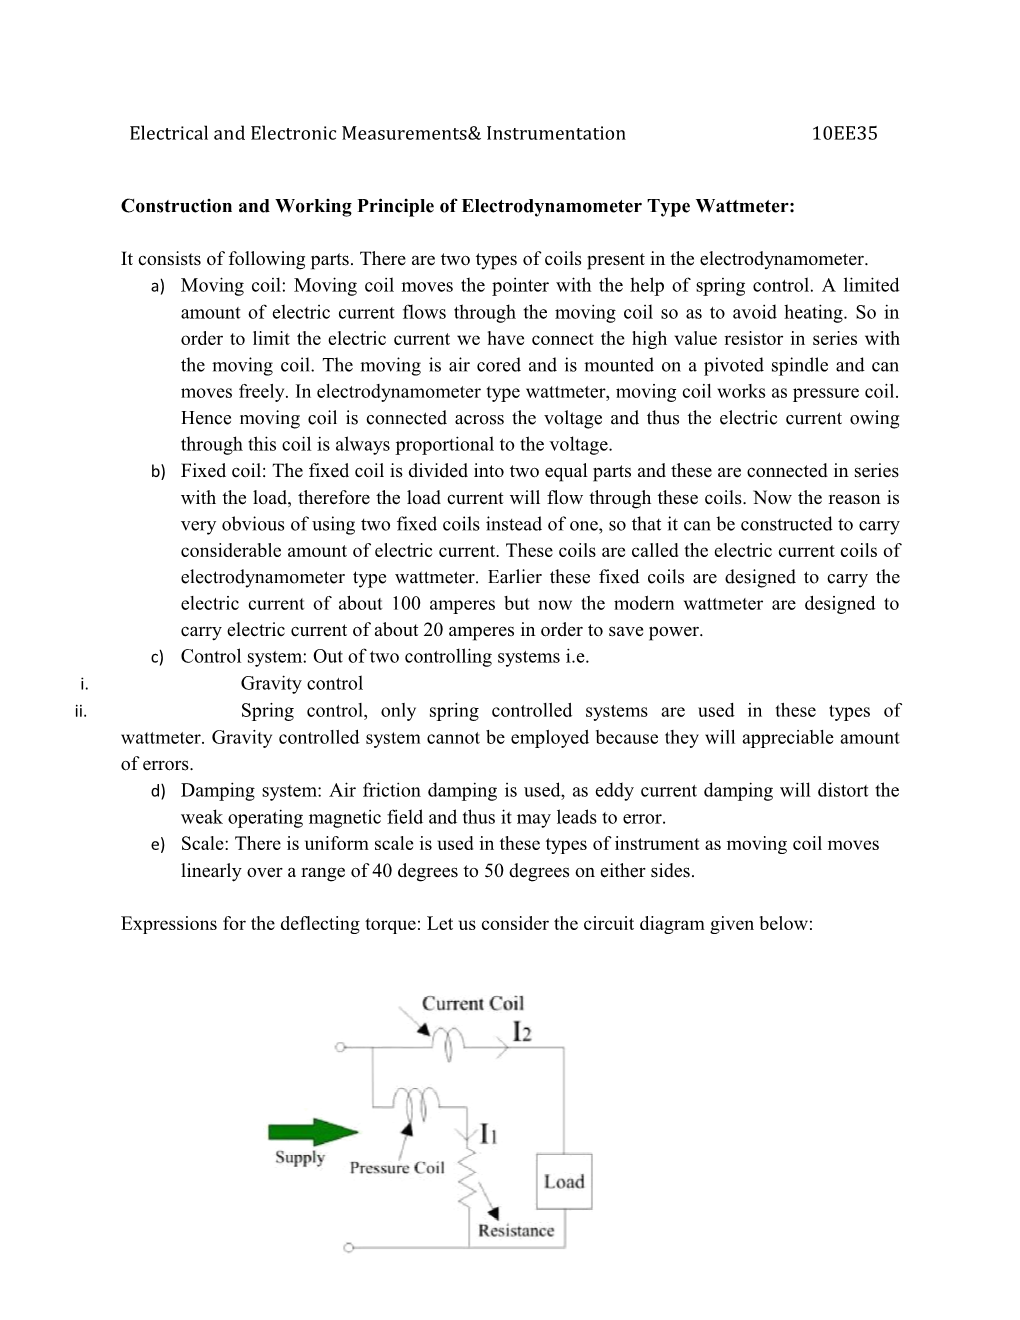 Construction and Working Principle of Electrodynamometer Type Wattmeter